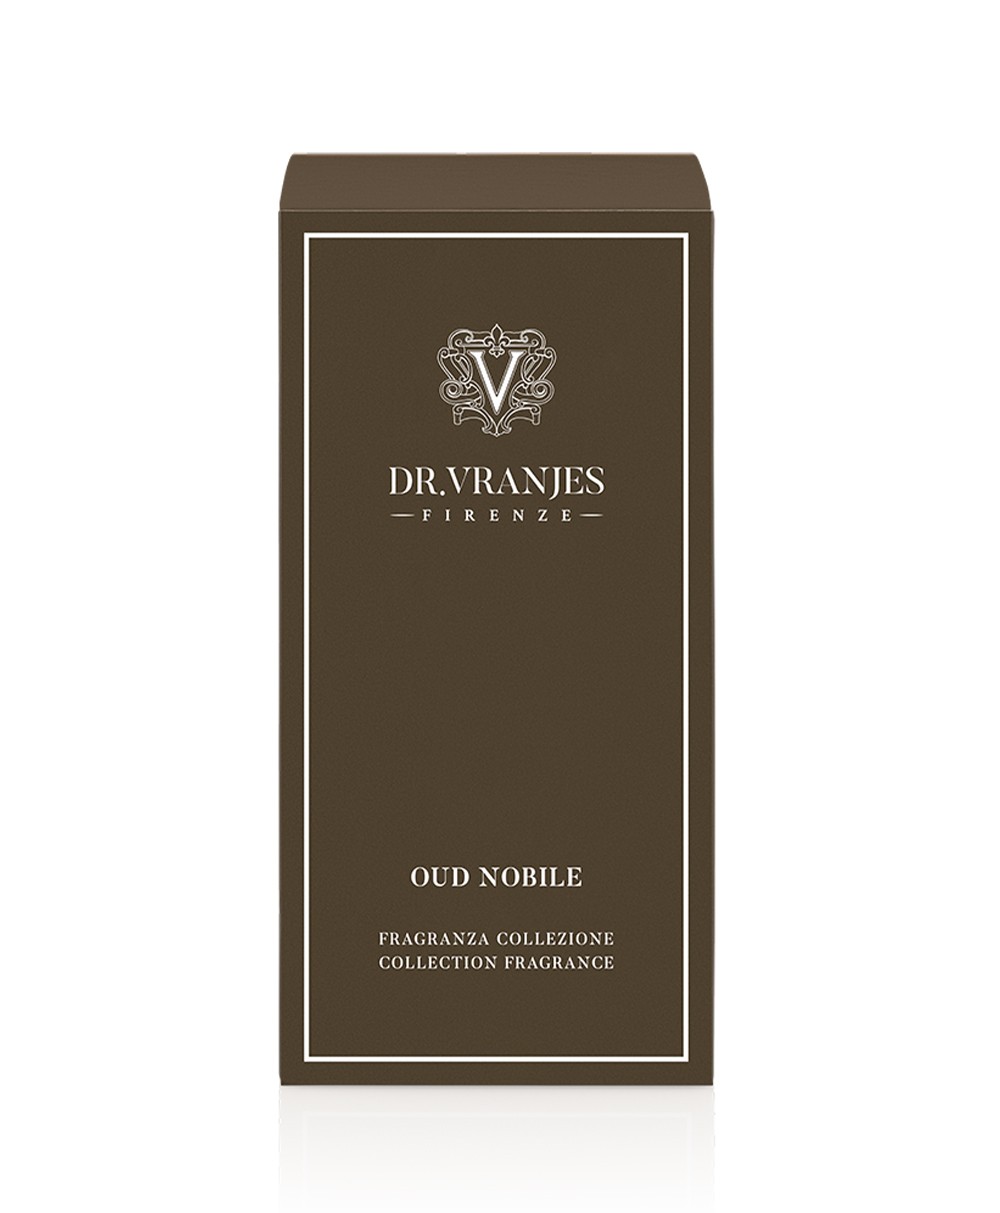 Oud Nobile Diffuser Verpackung aus der Classic Fragrance Collection von Dr. Vranjes Firenze im RAUM Conceptstore